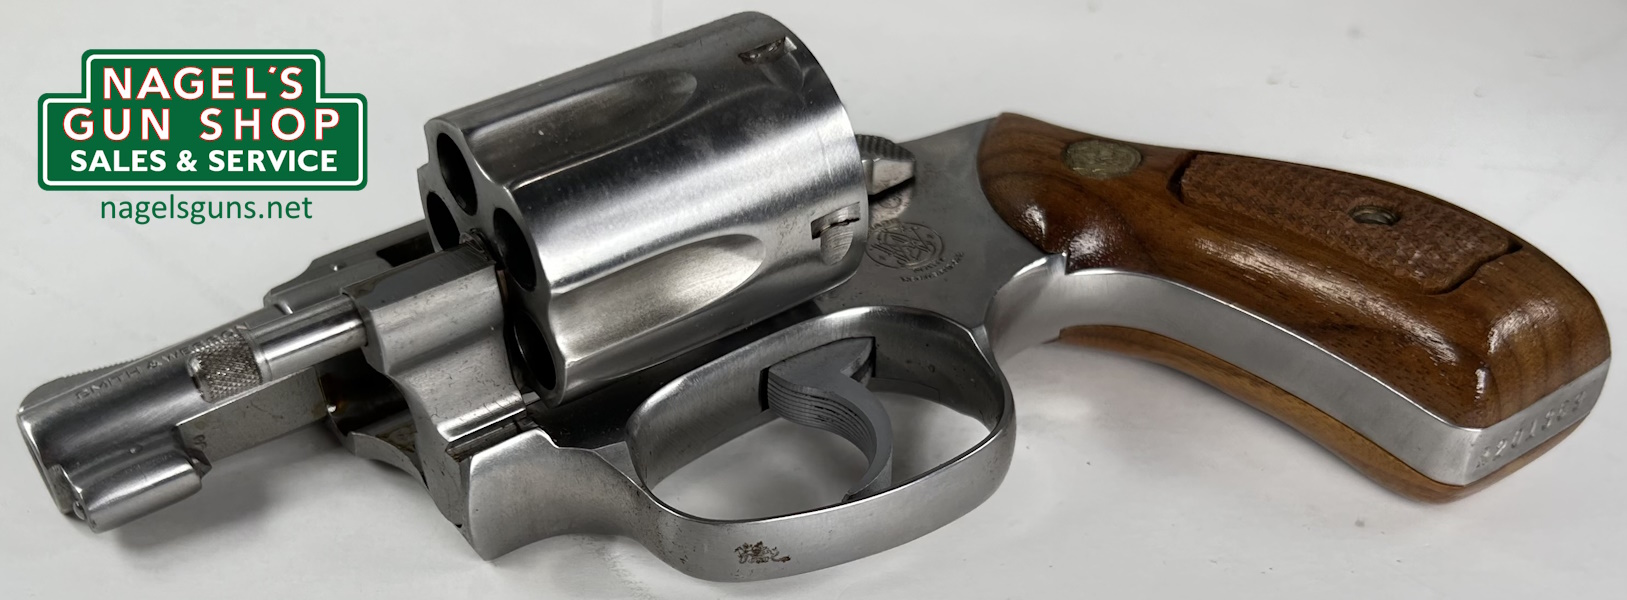 pistol gun safe